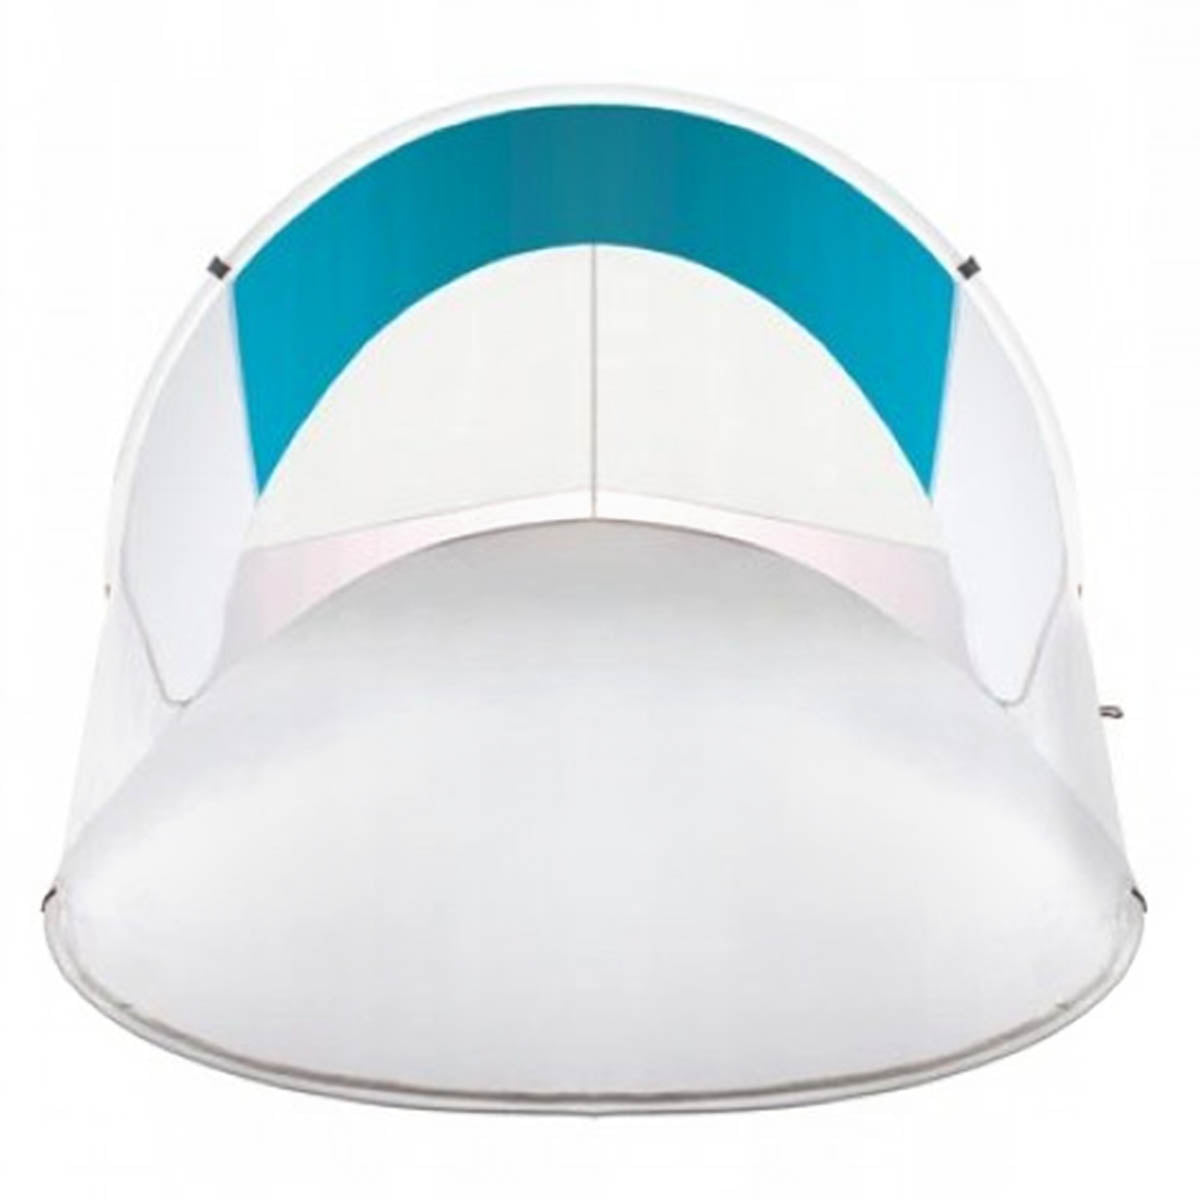 Ariko Tente de plage Pop up - Tente de plage - Pliable - 220 x 120 x 90